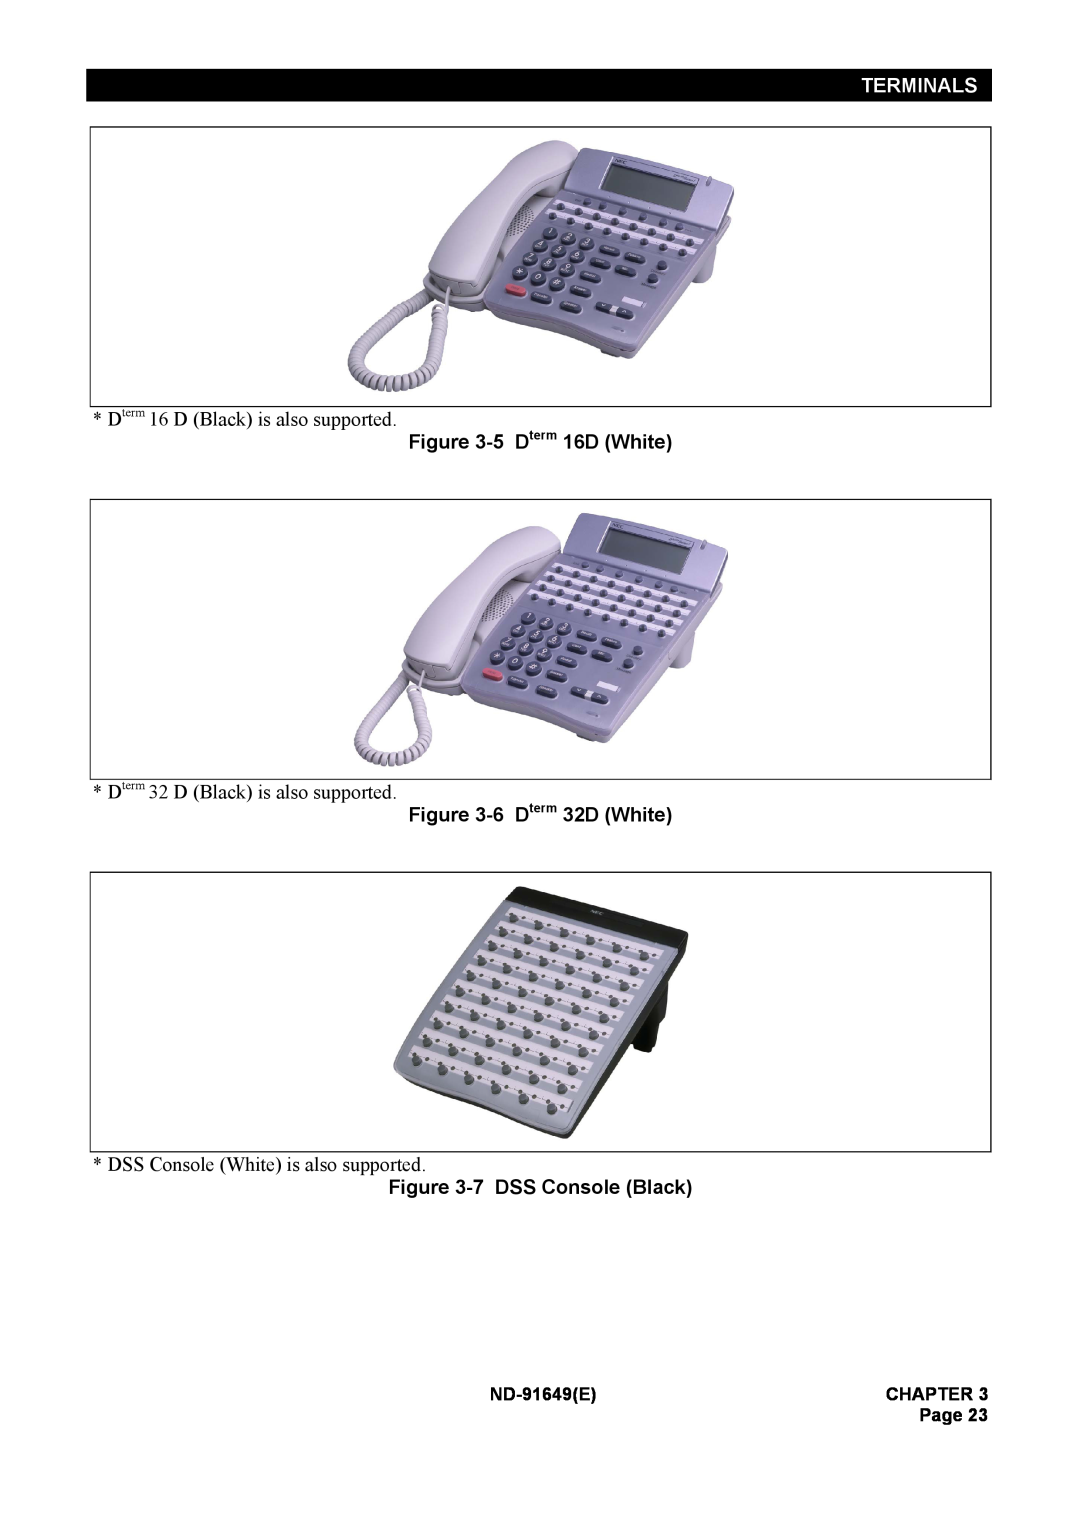 NEC manual Terminals, 5 Dterm 16D White, 6 Dterm 32D White, 7 DSS Console Black, ND-91649E, Chapter, Page 